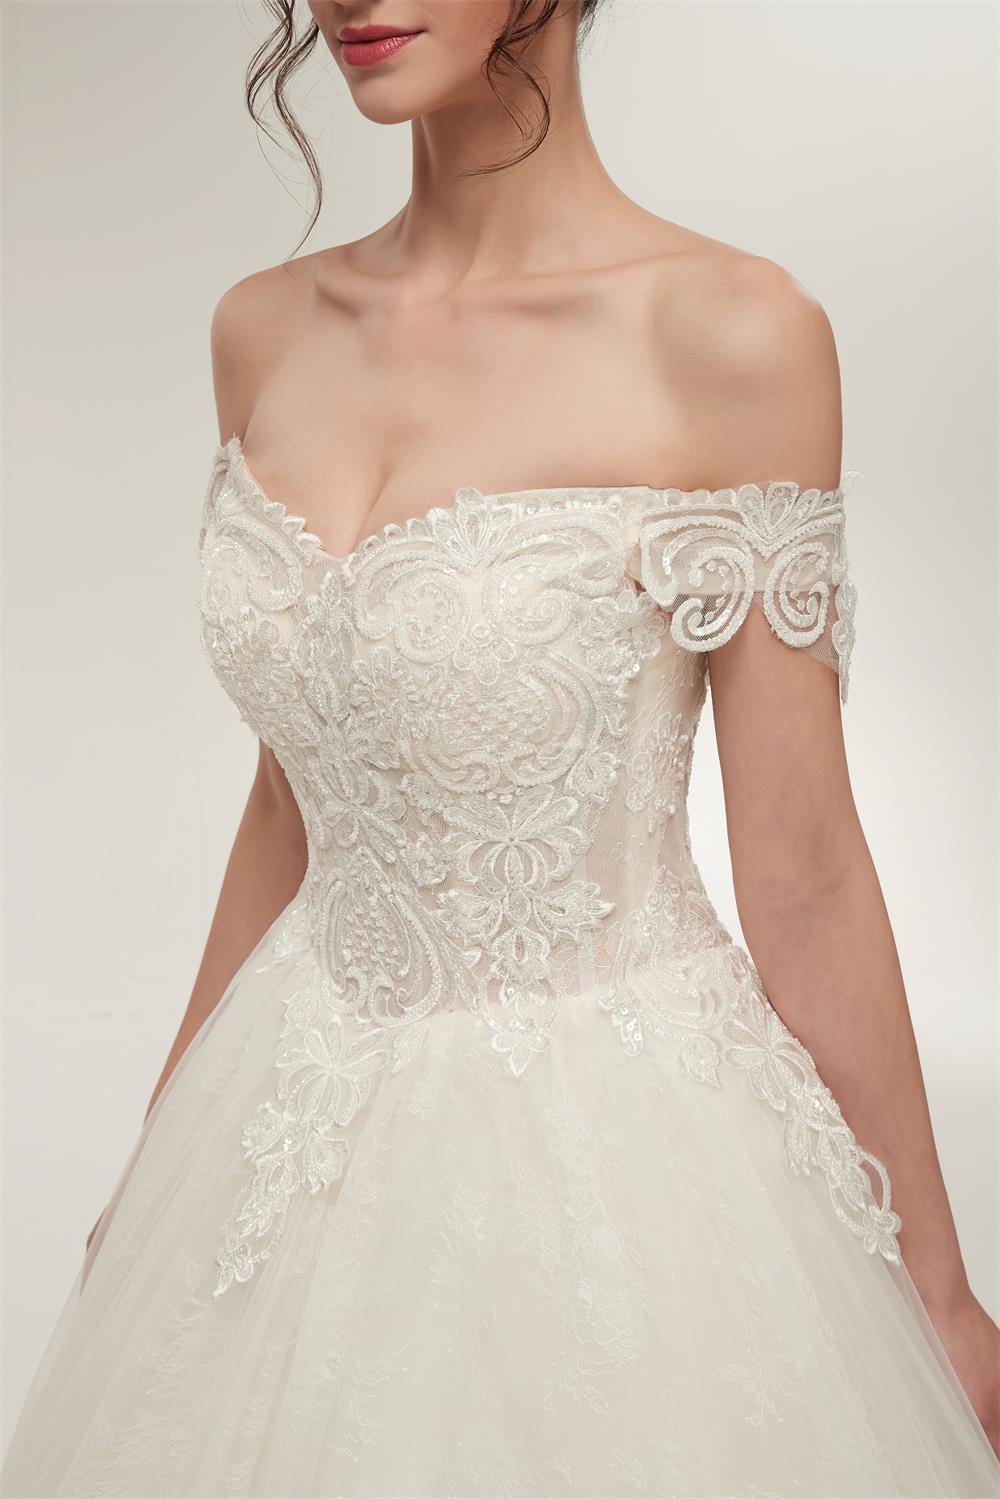 New wedding dress summer bride light luxury high waist thin simple ENS638